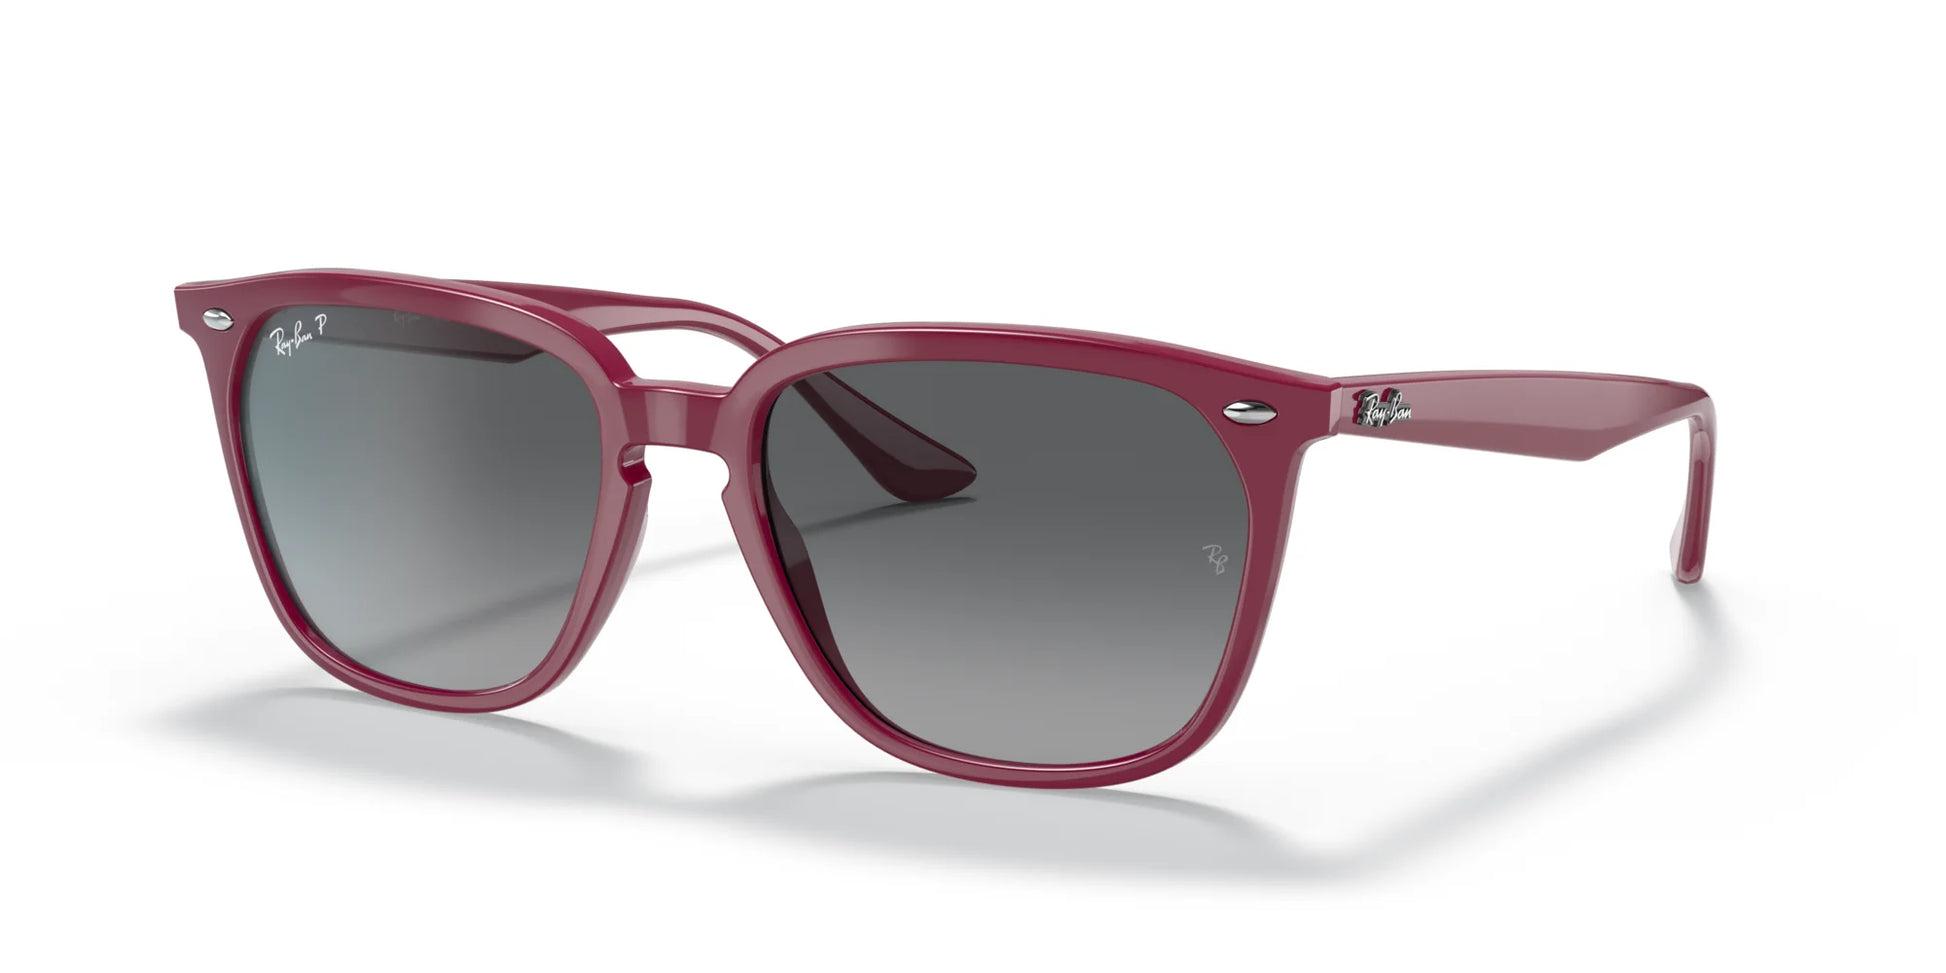 Ray-Ban RB4362 Sunglasses Bordeaux / Polarized Grey Gradient